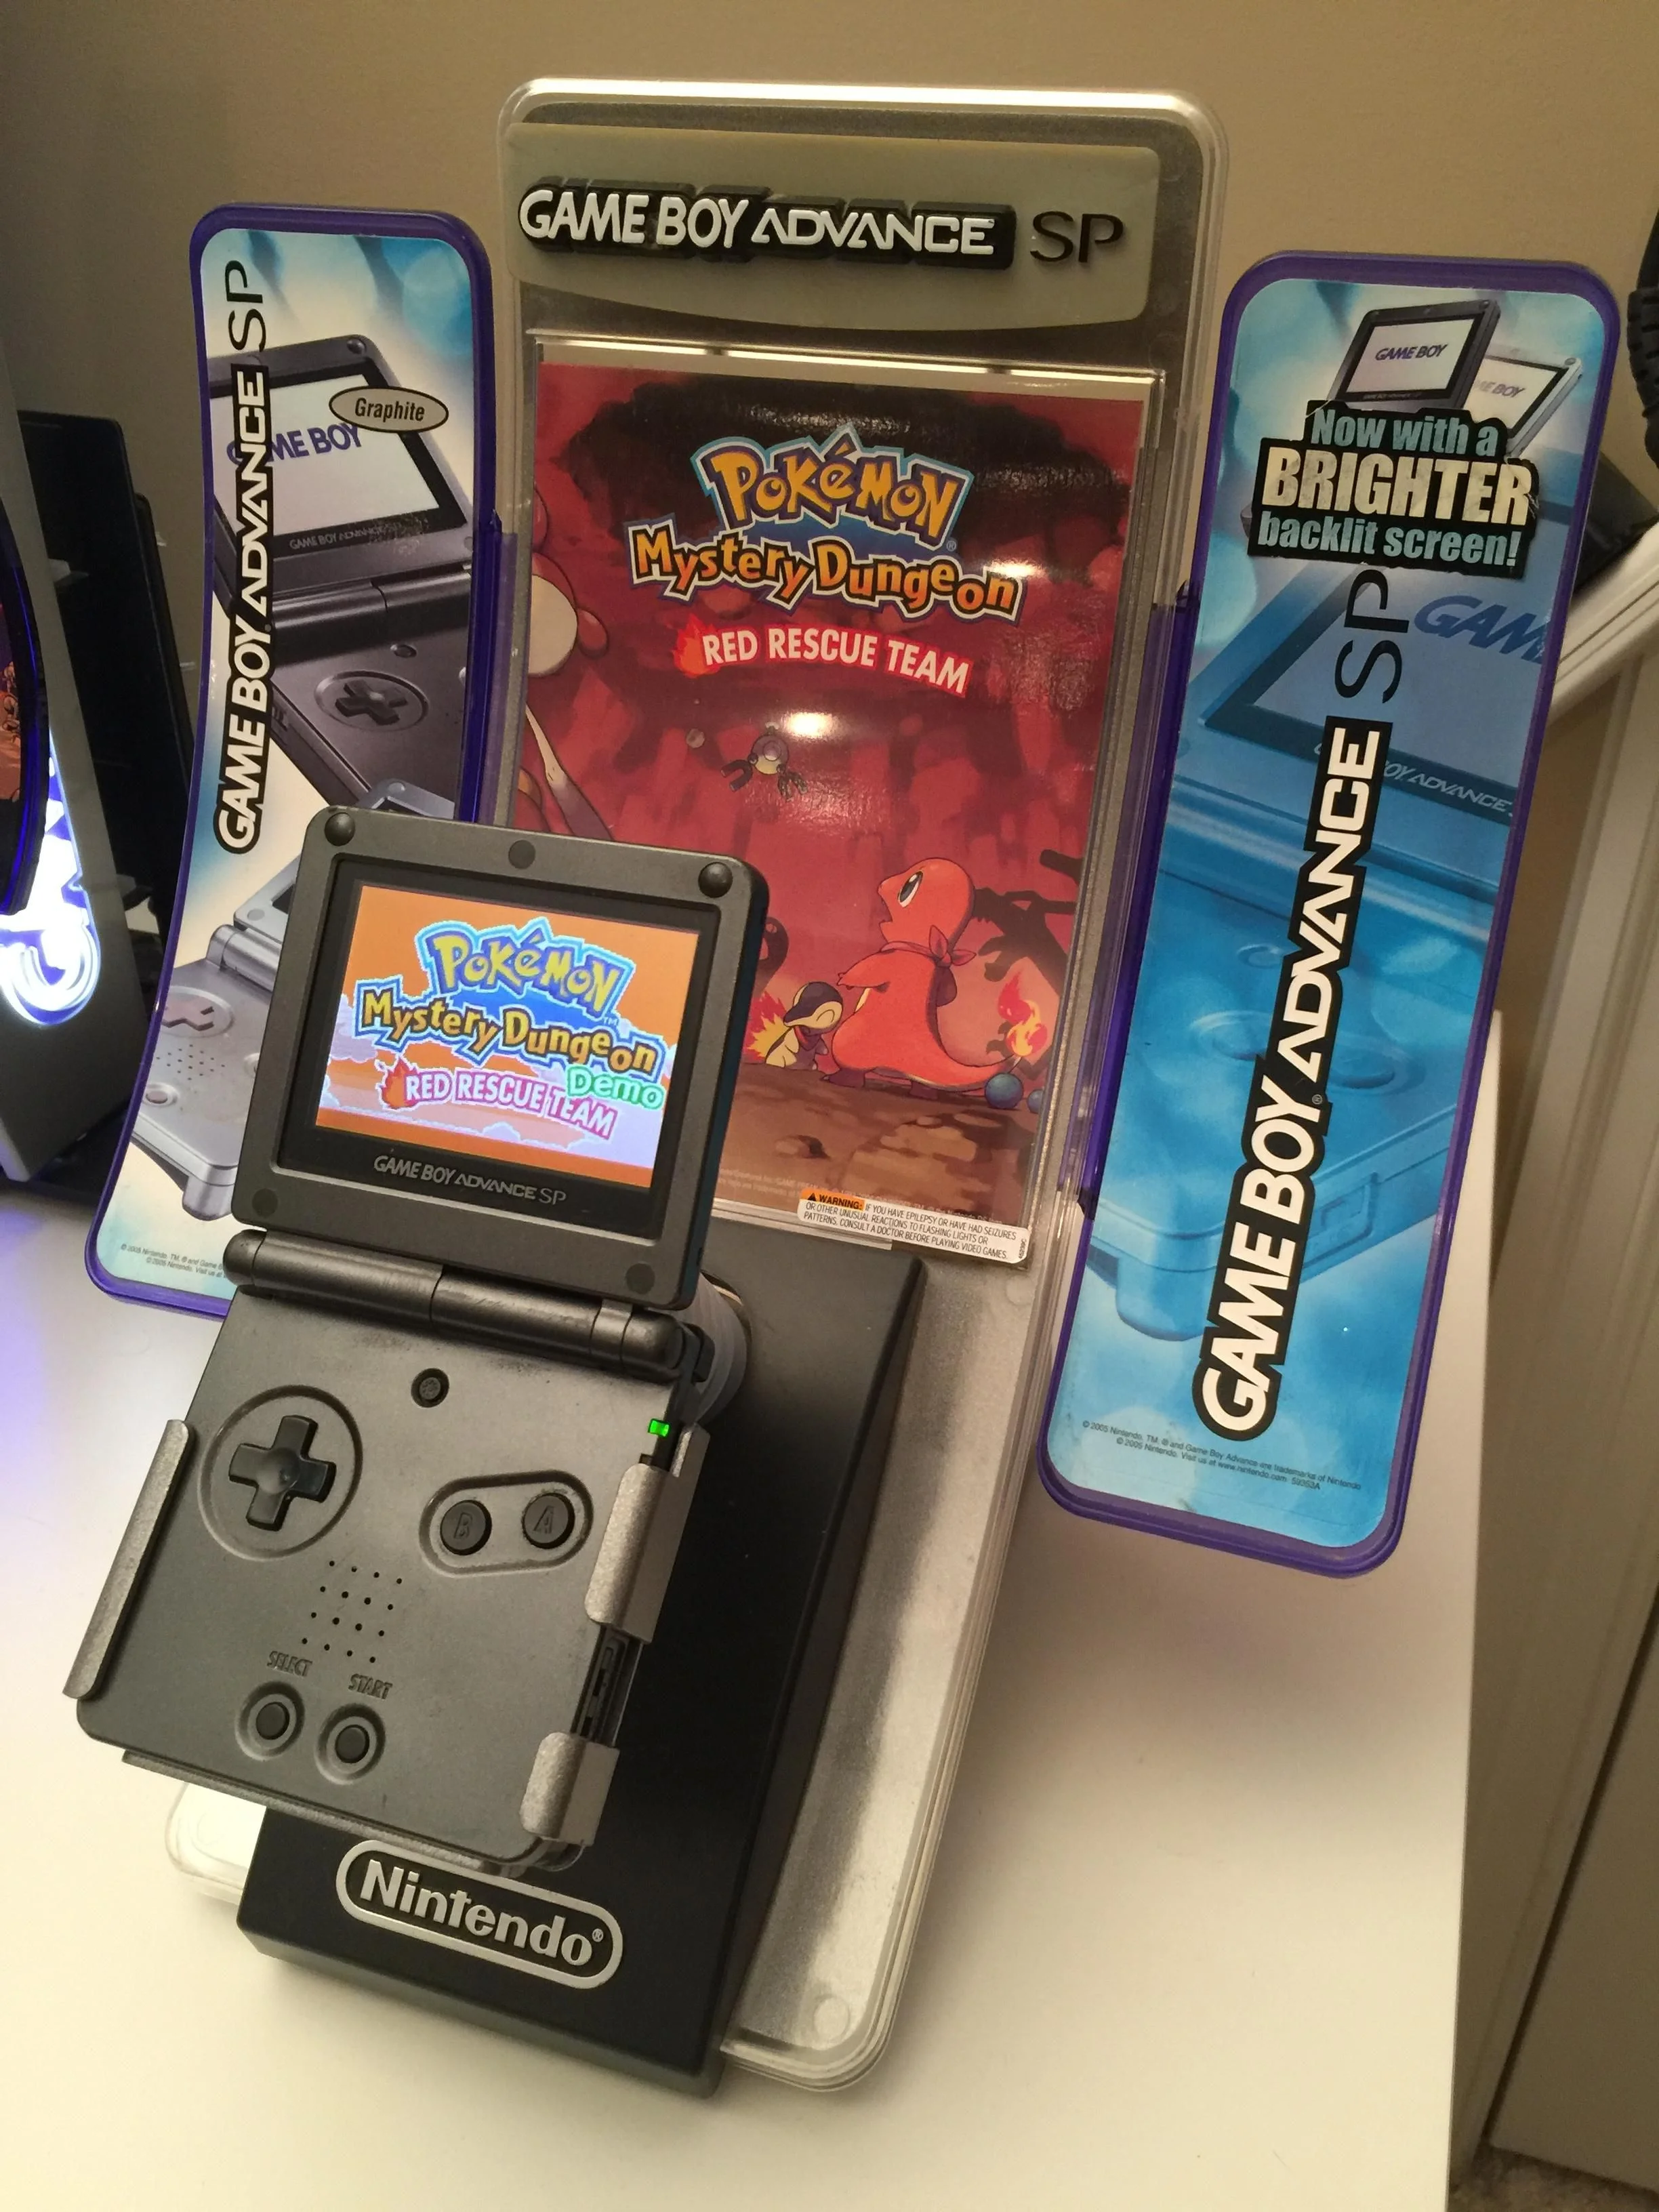  Nintendo Game Boy Advance SP Pokémon Mystery Dungeon Kiosk